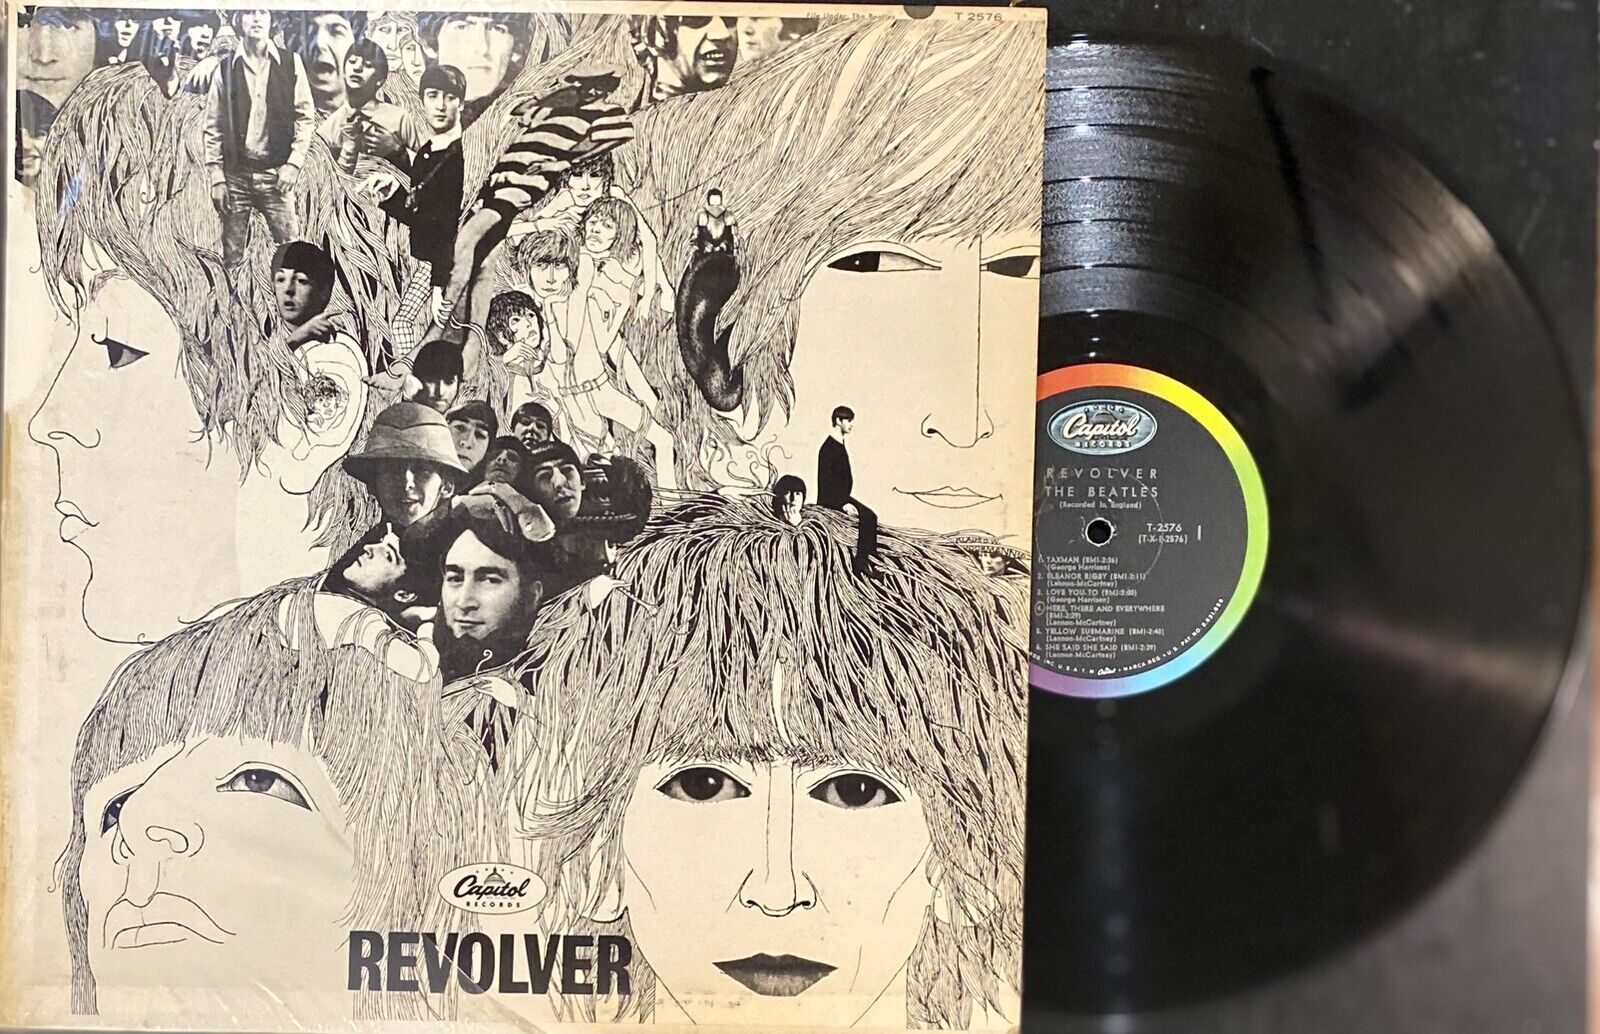 THE BEATLES “REVOLVER” LP 1966 MONO T 2576  PARTIAL SHRINK SCRANTON PRESSING VG+